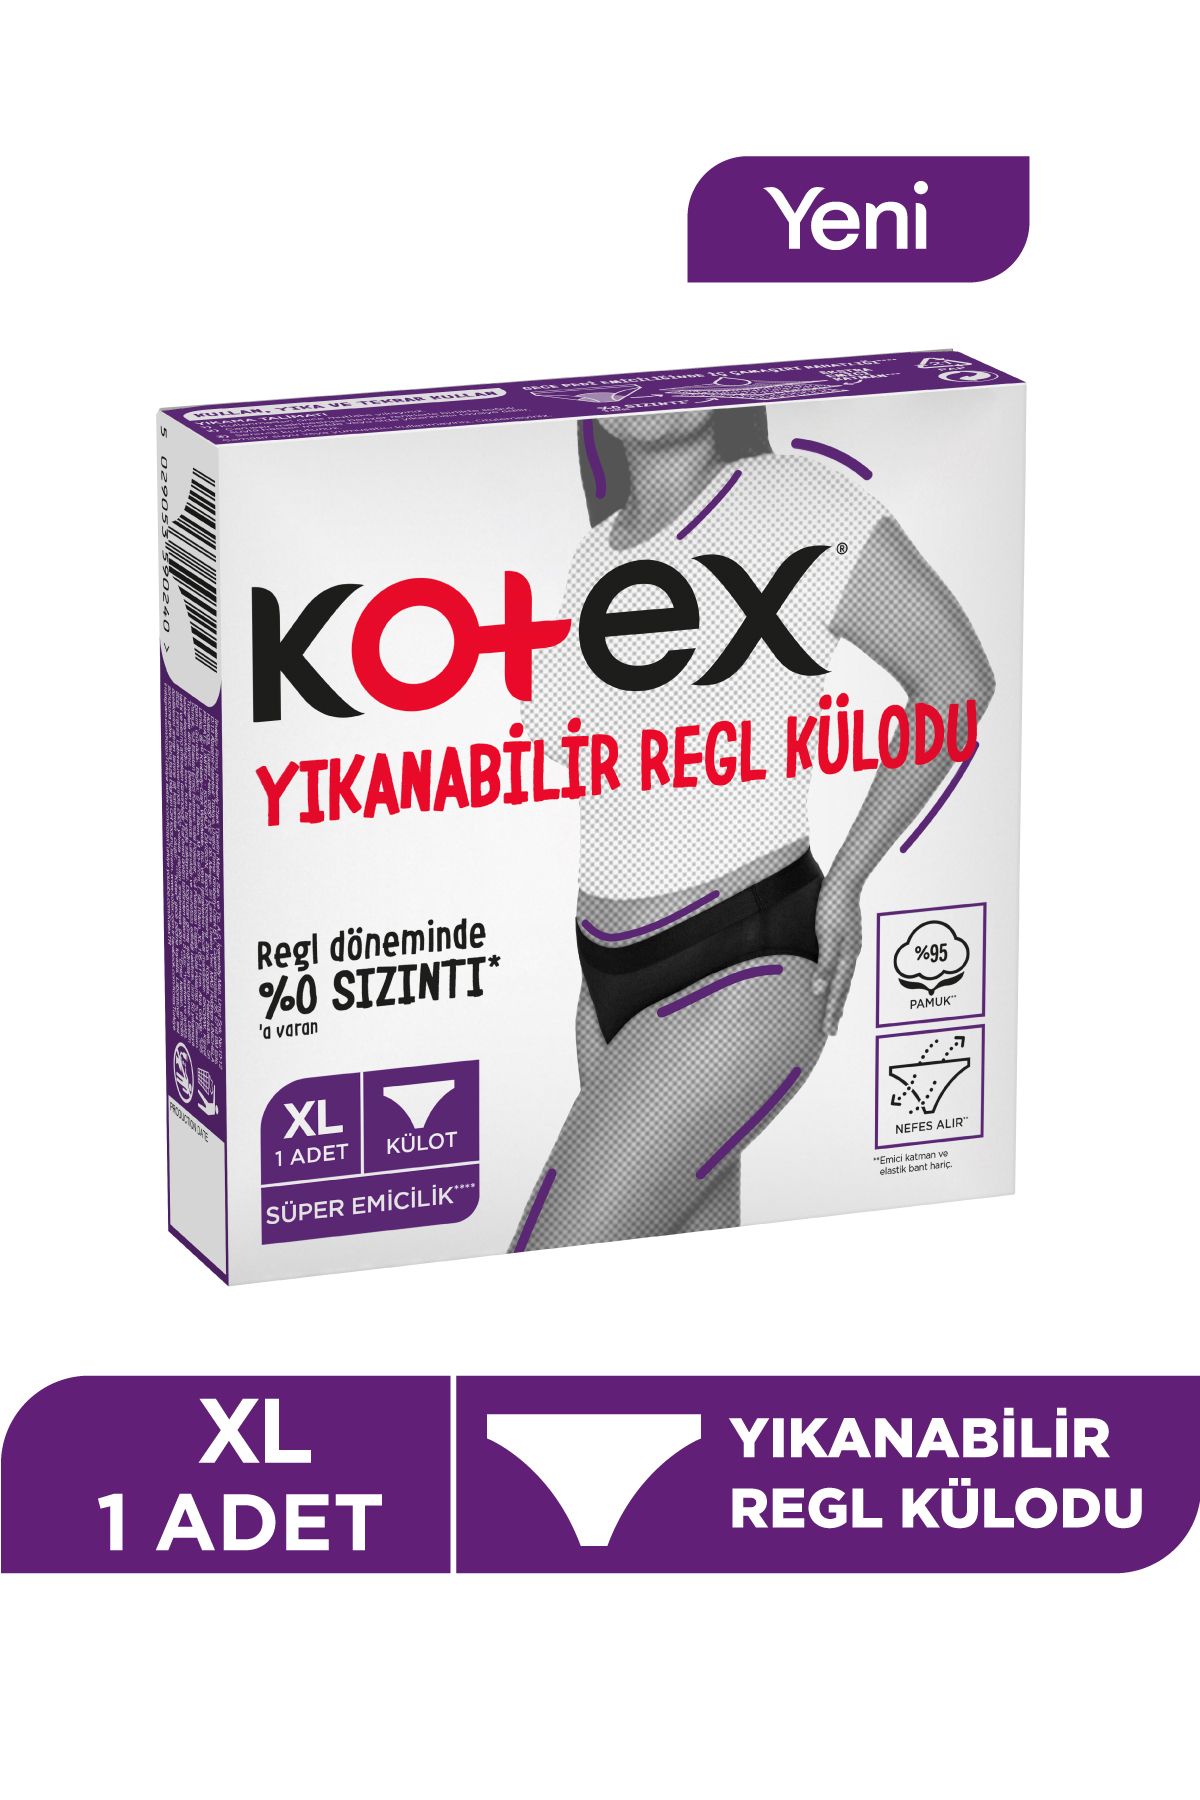 Kotex Yıkanabilir Regl Külodu XL Beden